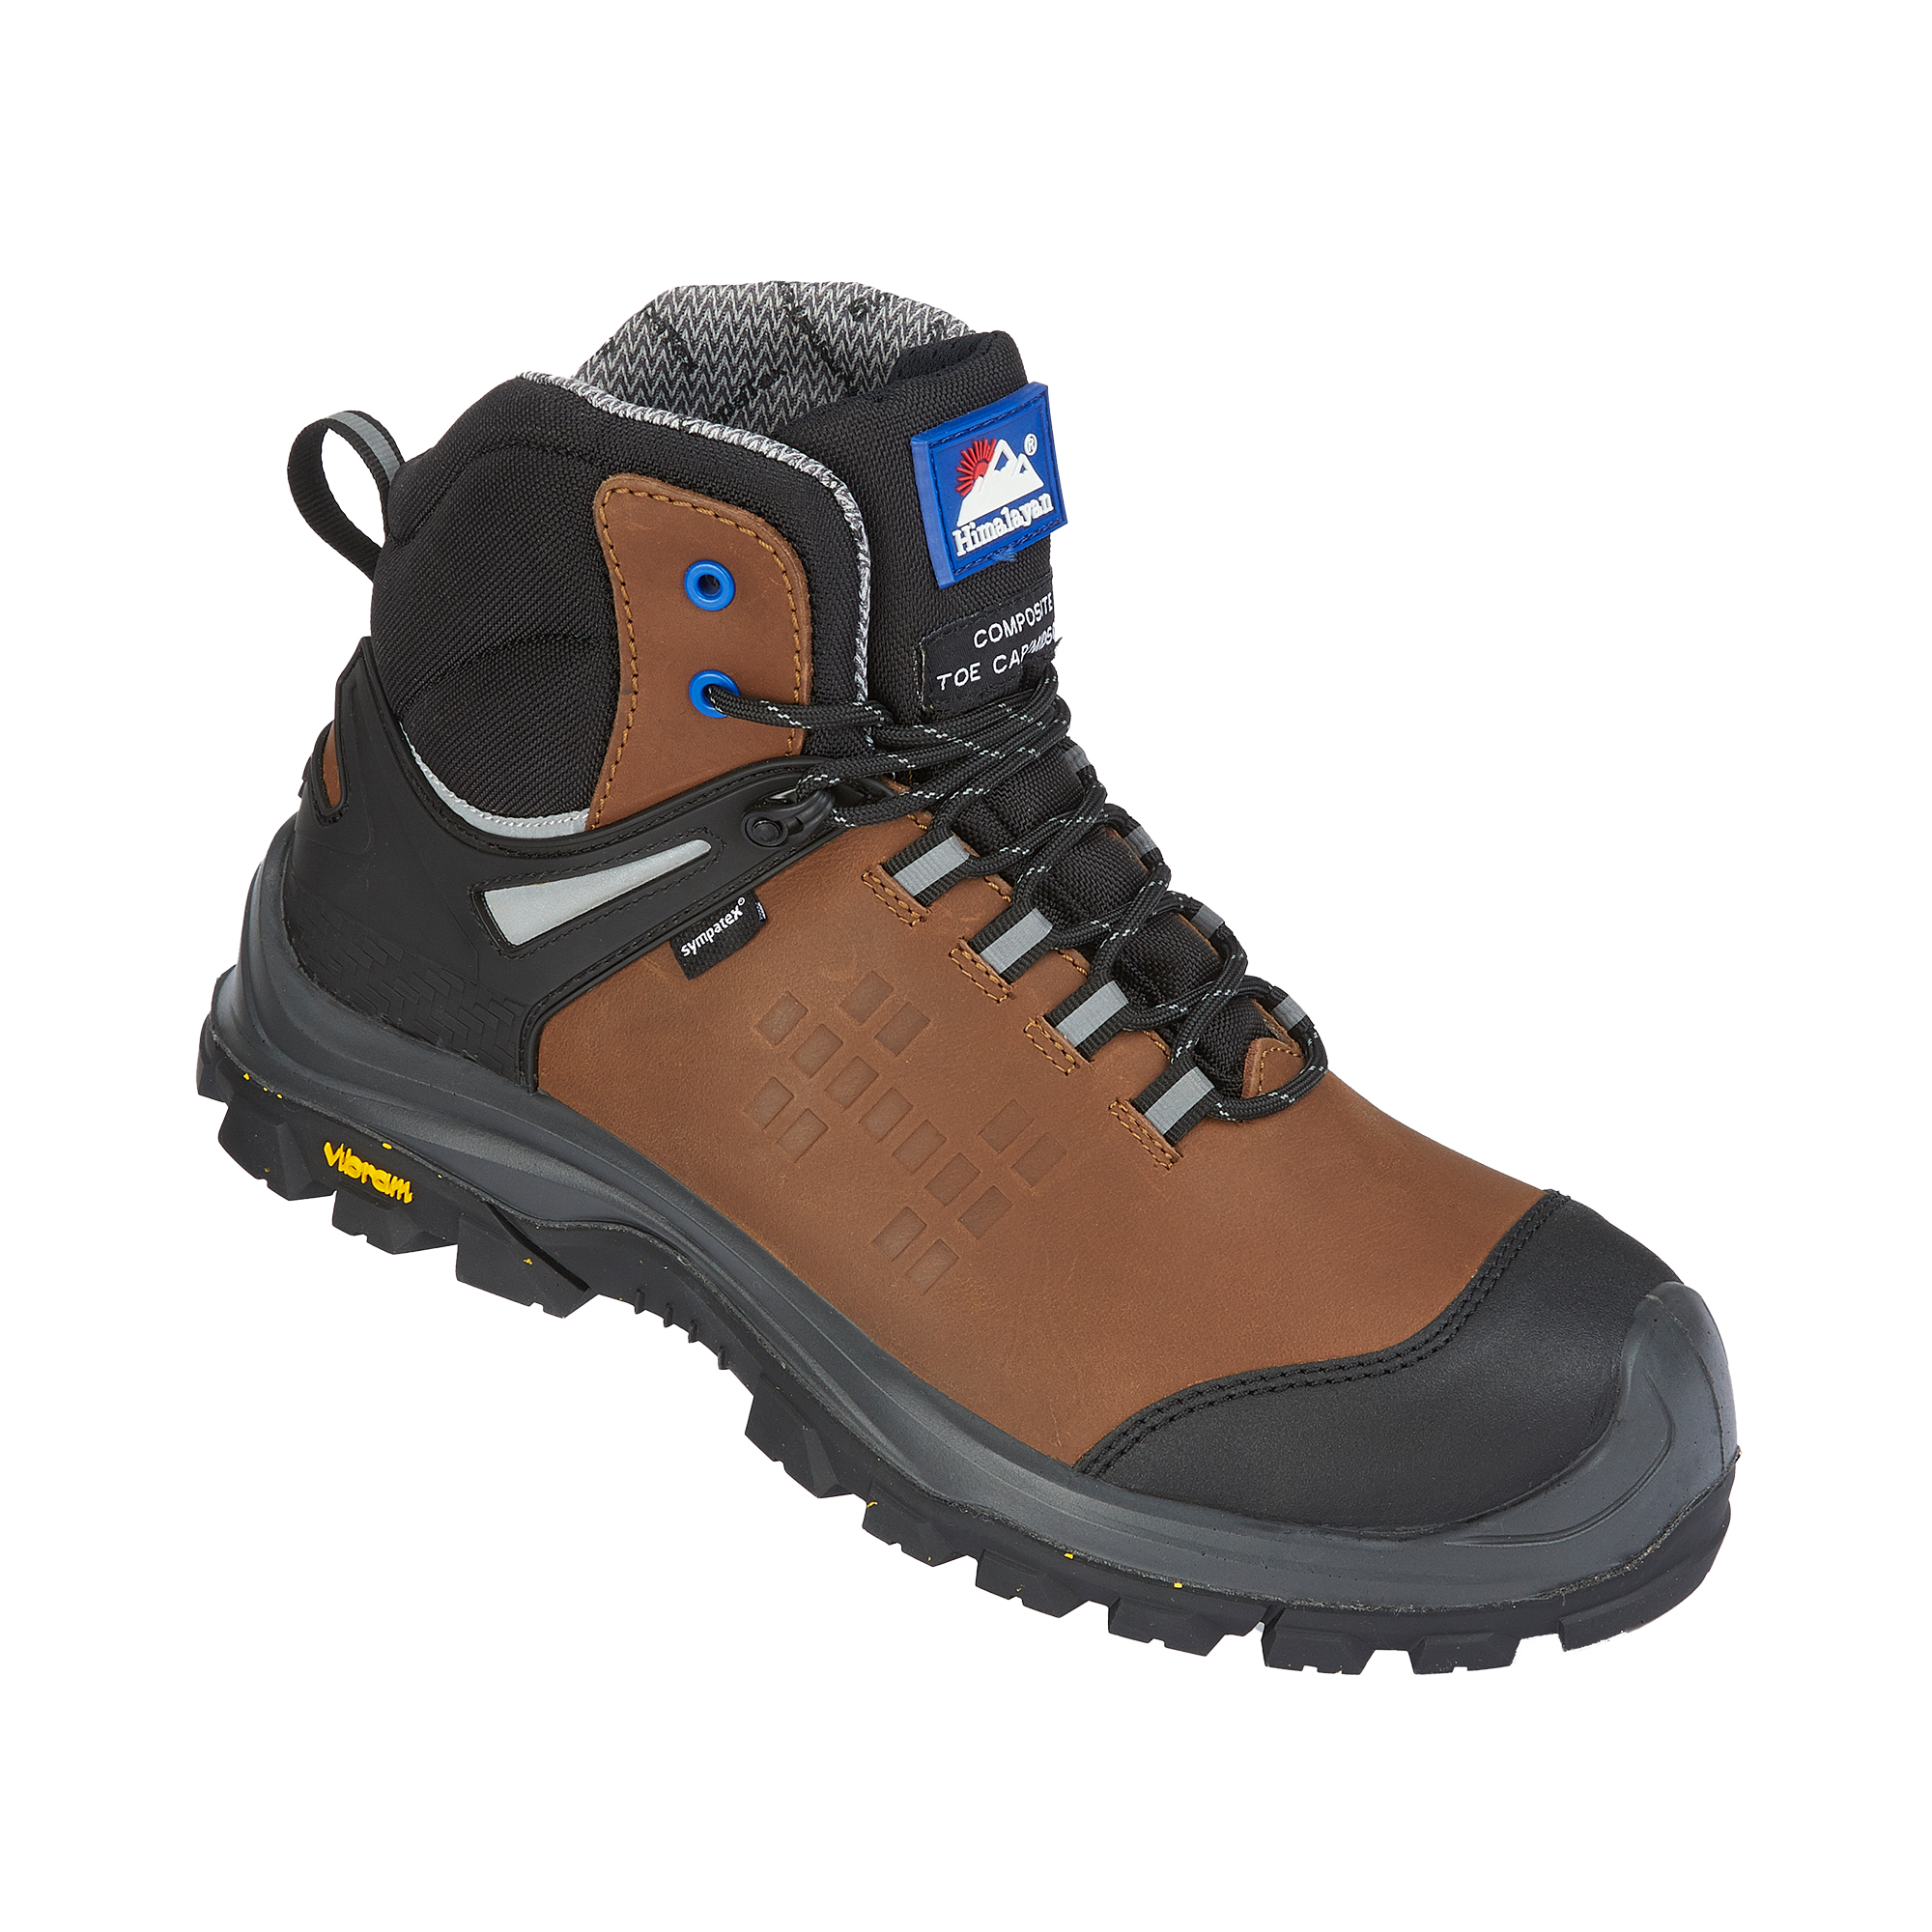 Himalayan Vibram Safety Footwear. Sympatex Lining and Arneplan Insole